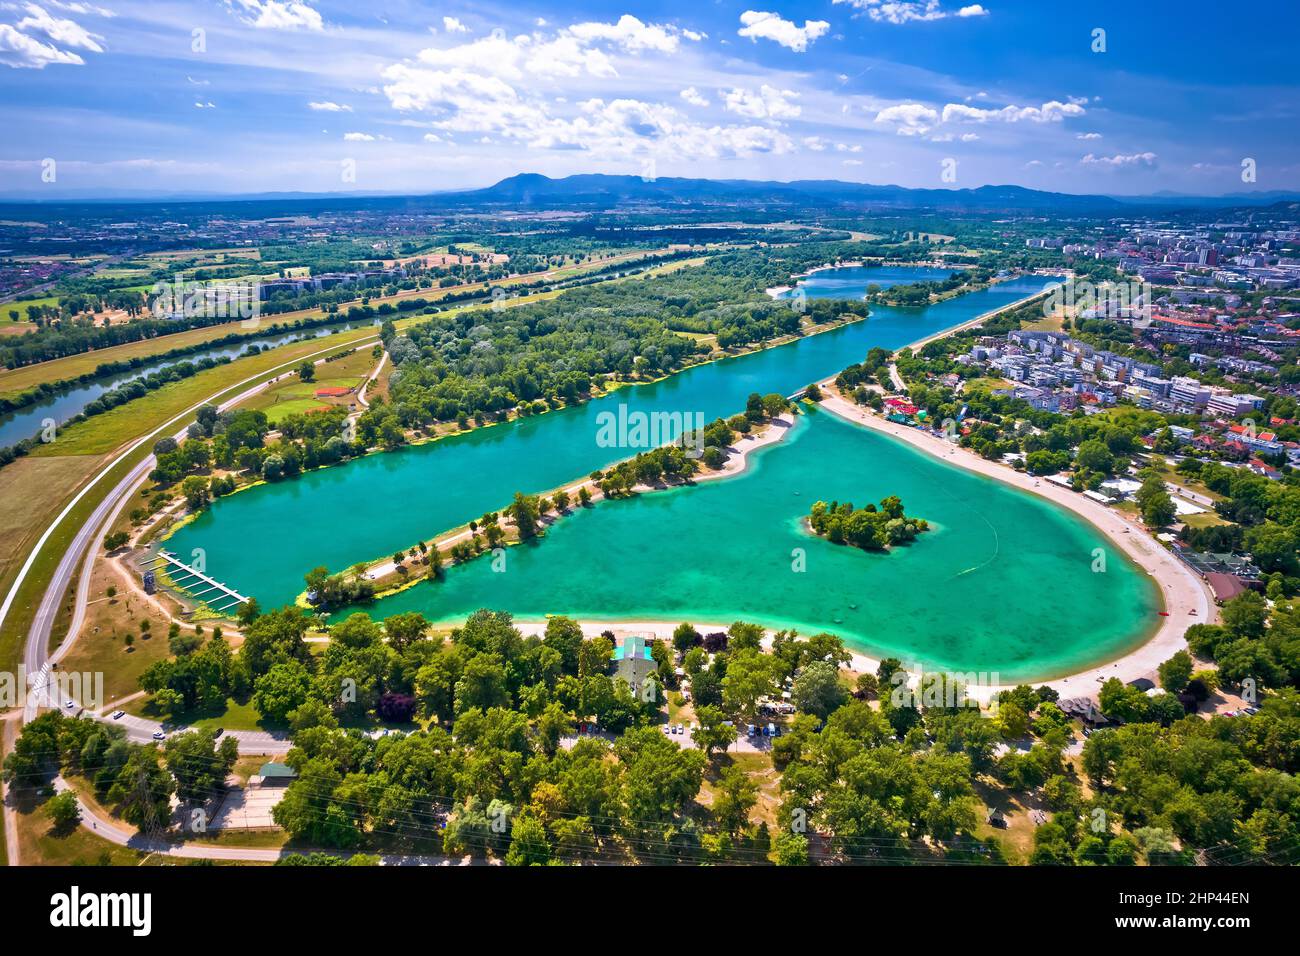 Jarun lake. Aerial view of beaches of Jarun lake and Sava river in city of Zagreb, summer oasis in capital of Croatia Stock Photo